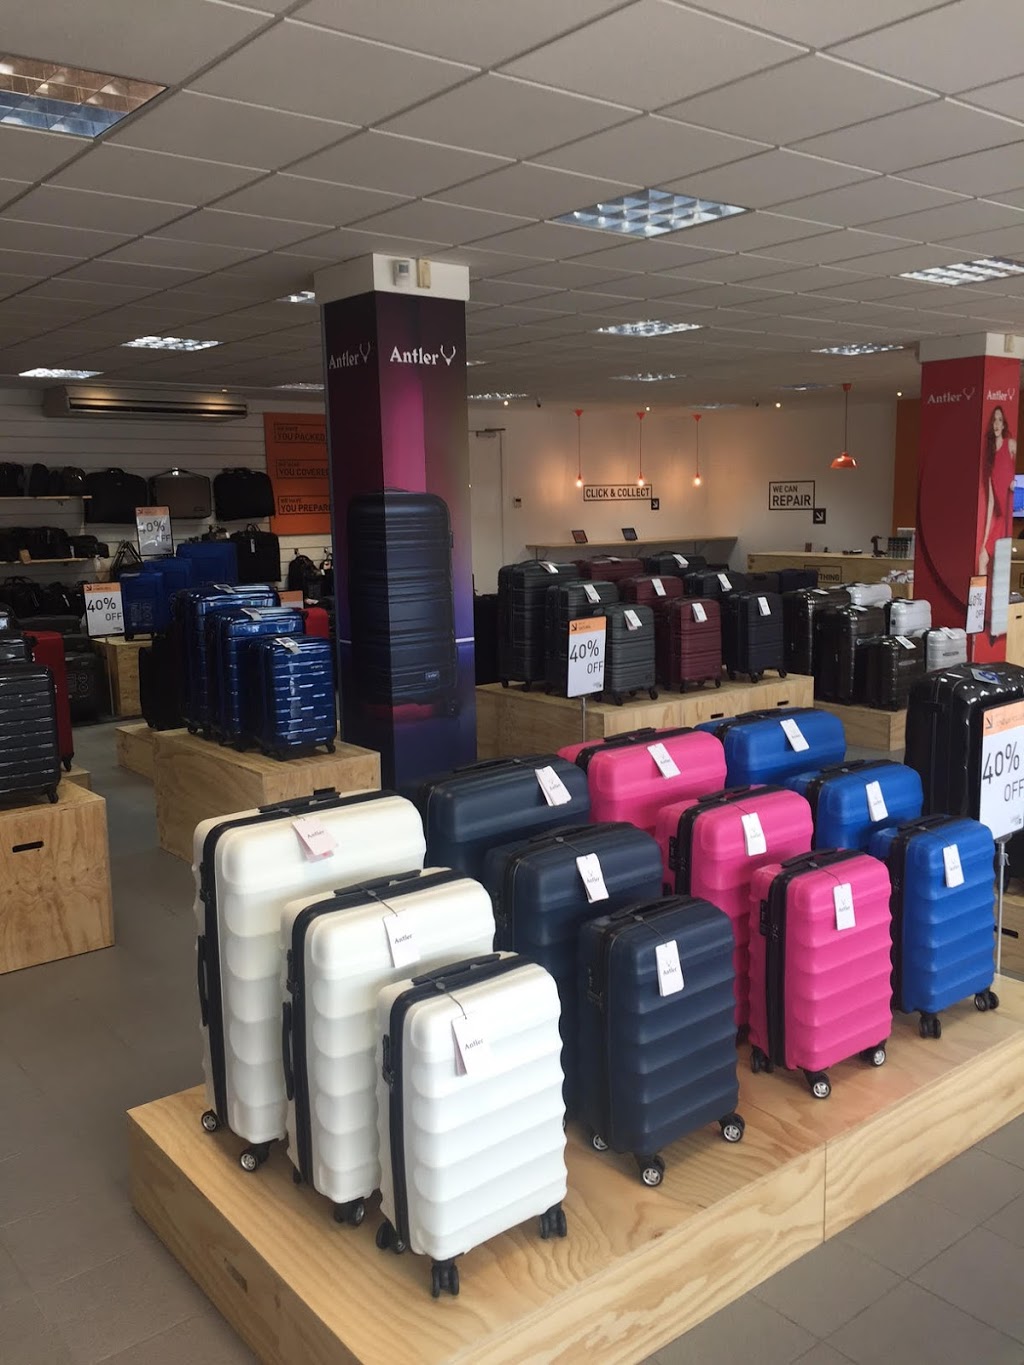 Luggage Hub | store | 1432 Dandenong Rd, Oakleigh VIC 3166, Australia | 1300814758 OR +61 1300 814 758